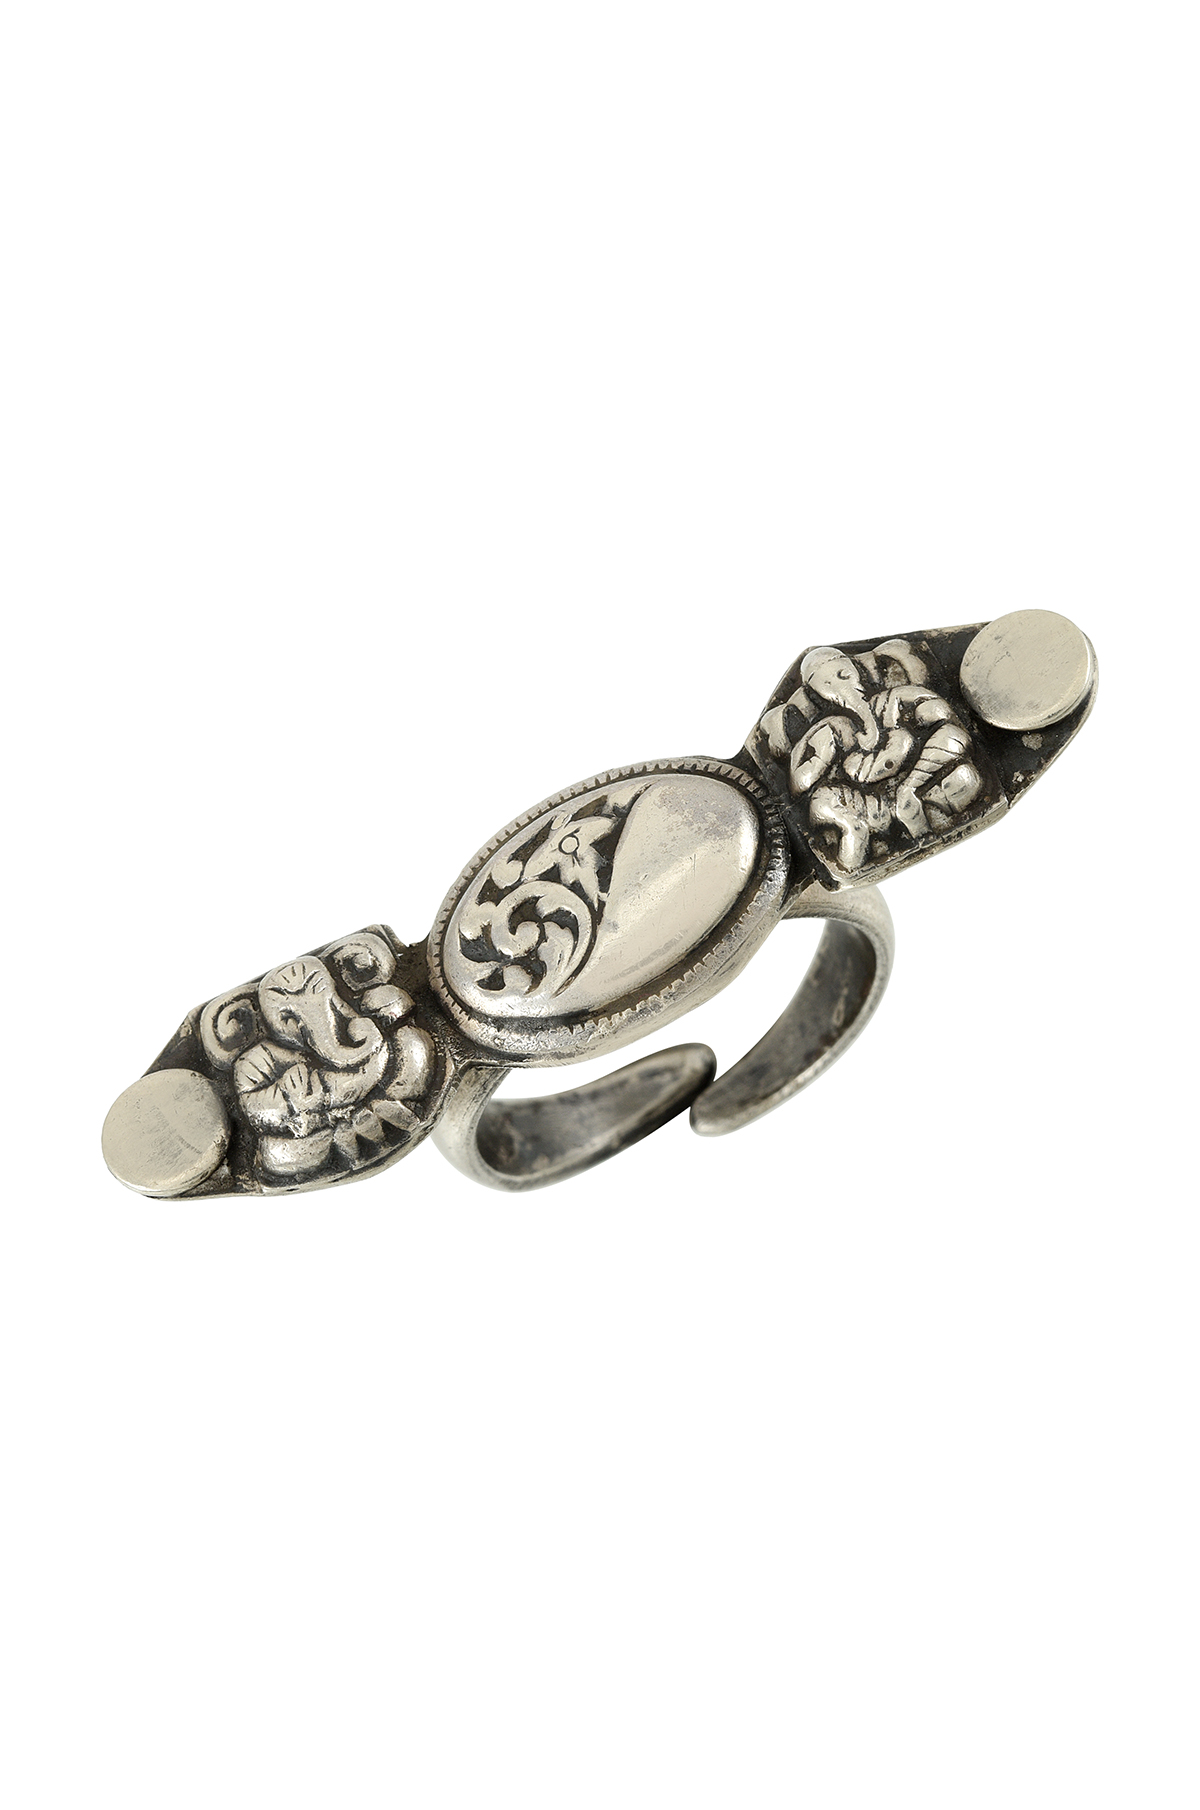 Silver Mayur Ganesha Ring